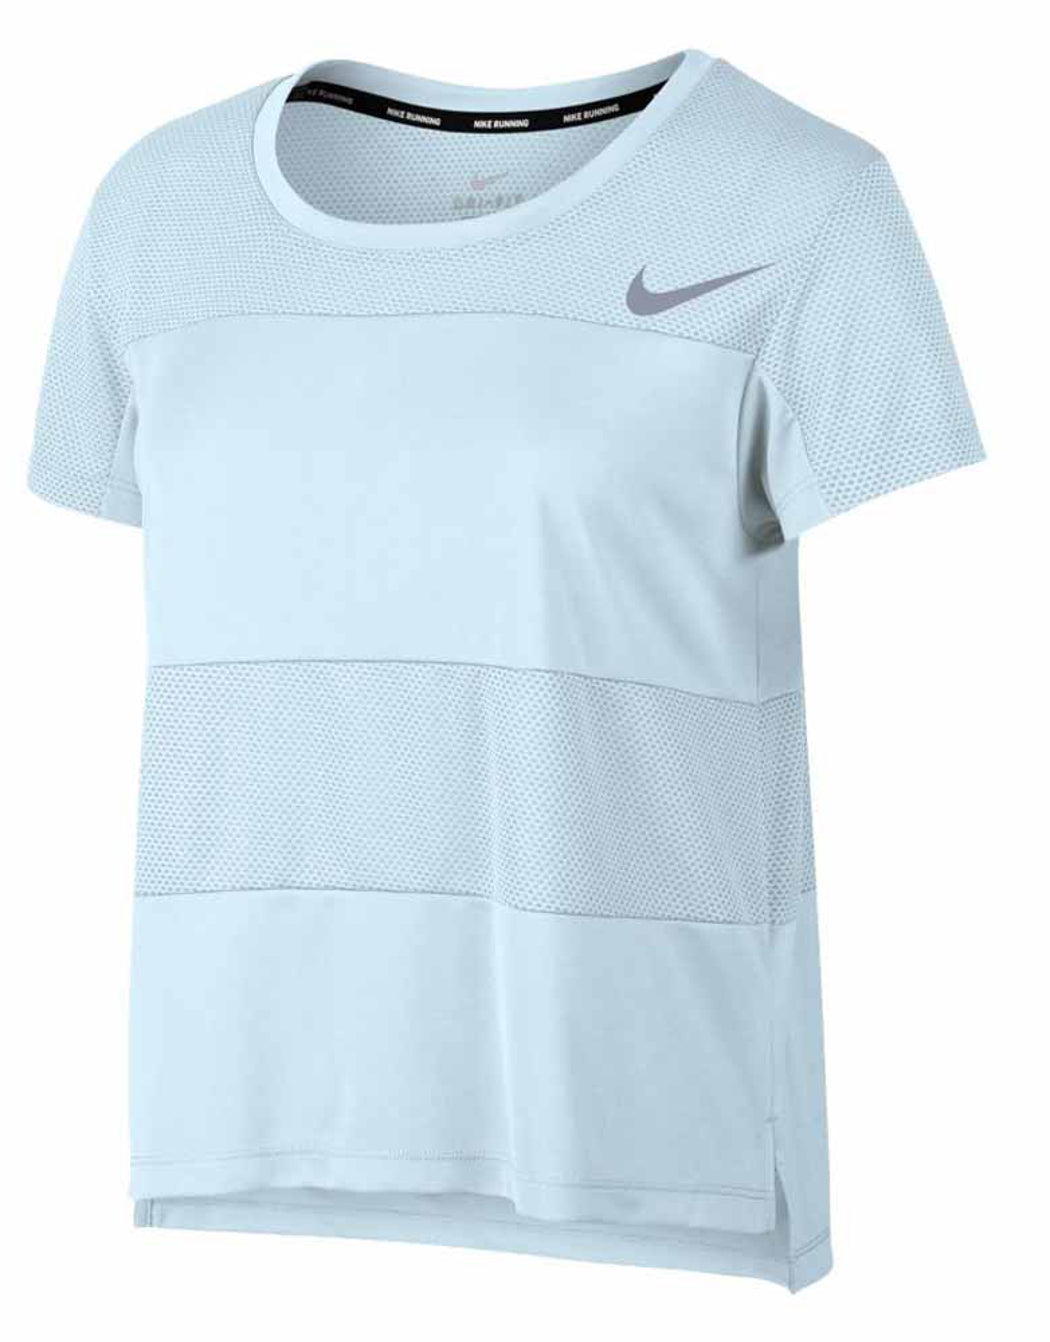 Nike Womens Dry TopCity Core Short Sleeve T-Shirt